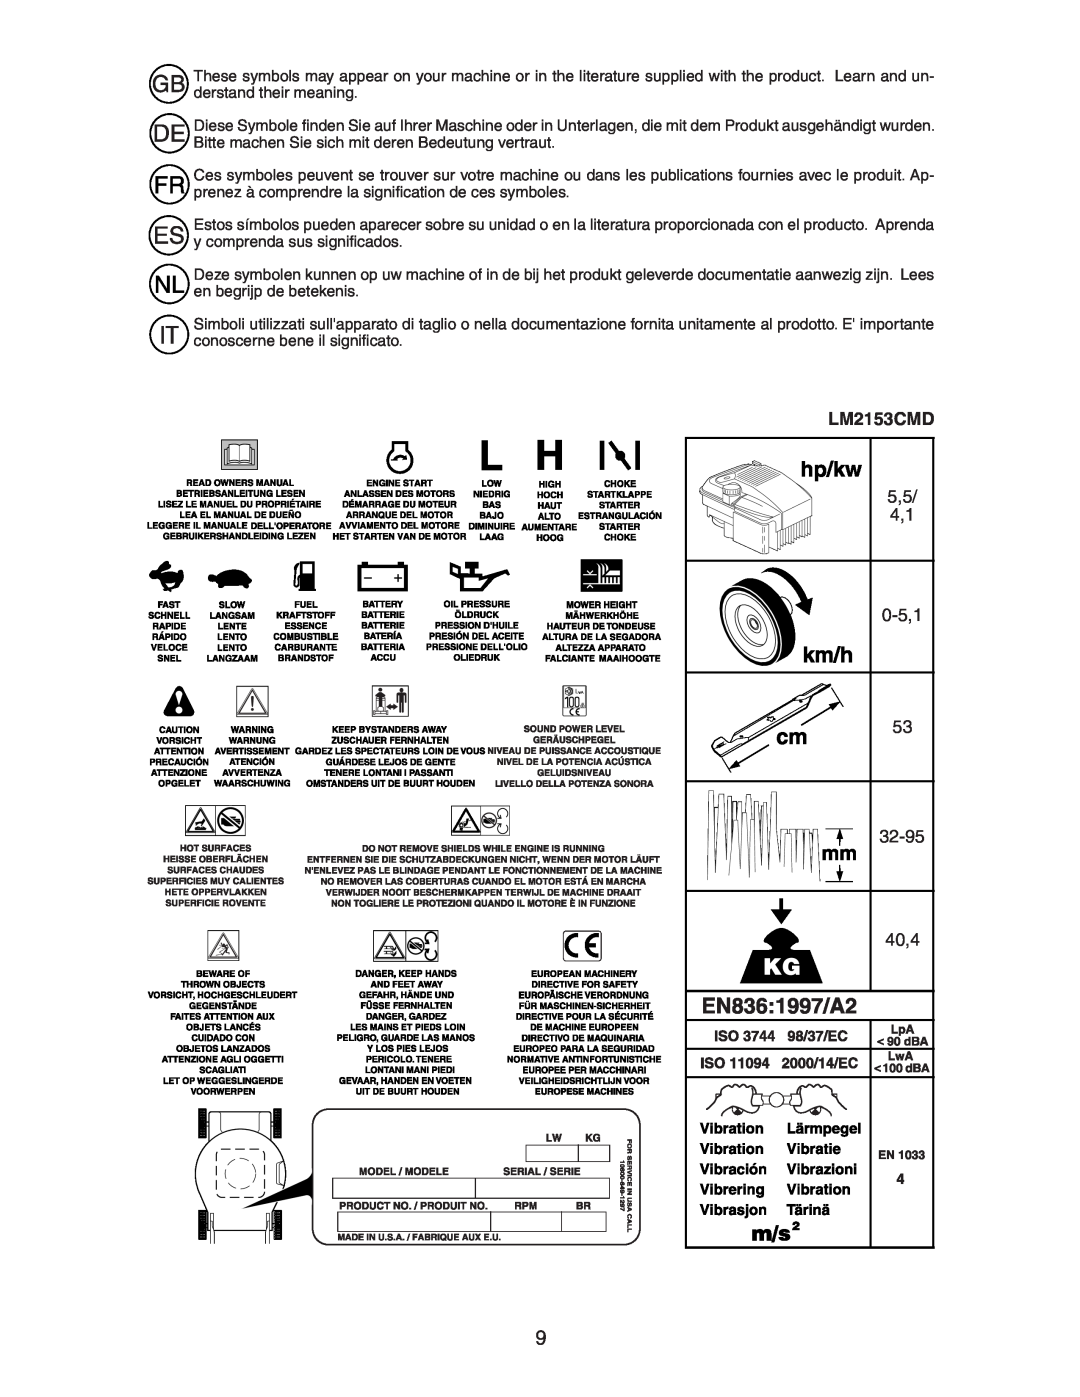 Jonsered LM2153CMD instruction manual 0-5,1, 32-95, 40,4 